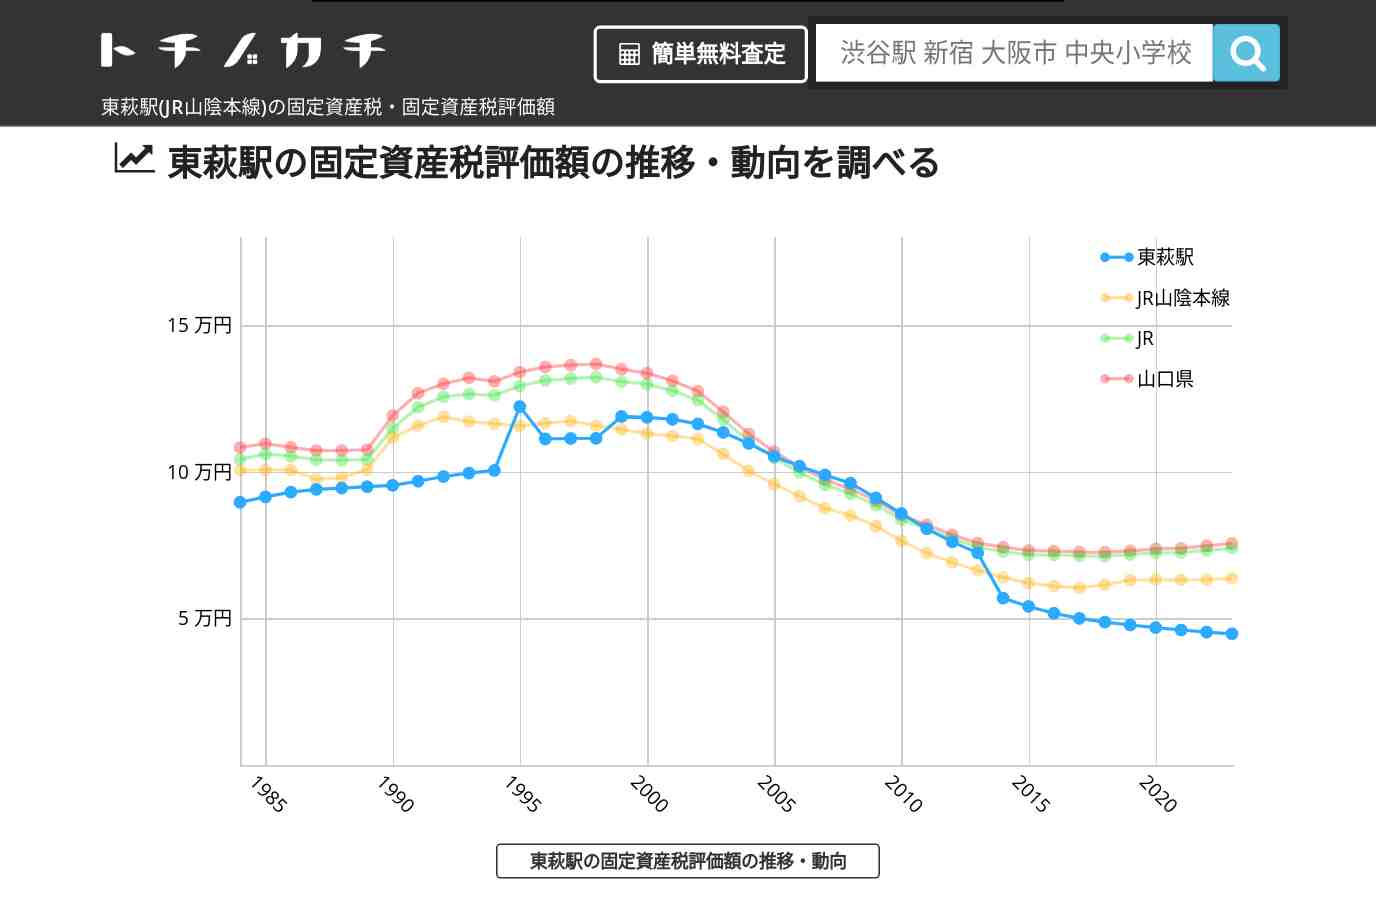 東萩駅(JR山陰本線)の固定資産税・固定資産税評価額 | トチノカチ